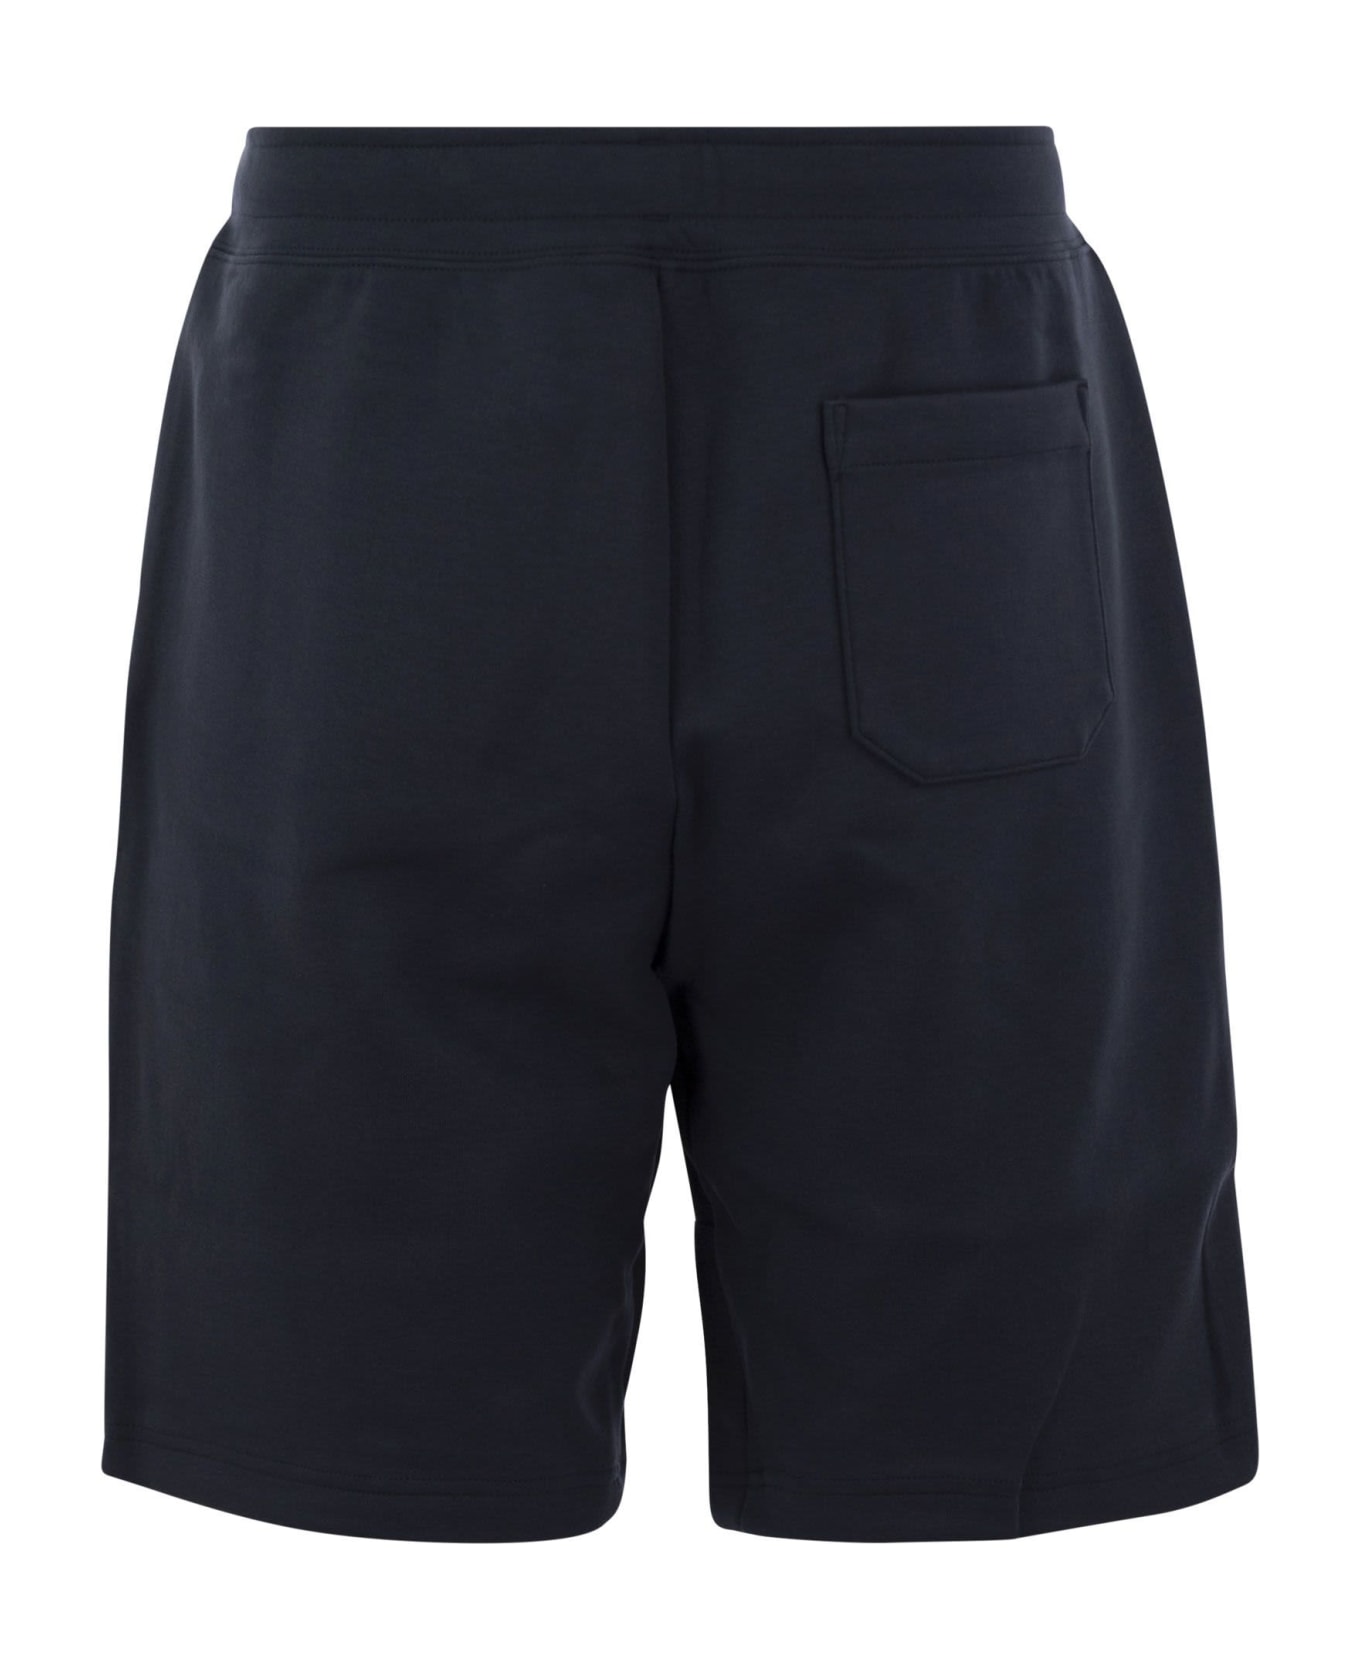 Polo Ralph Lauren Bermuda Shorts With Pony - Navy Blue